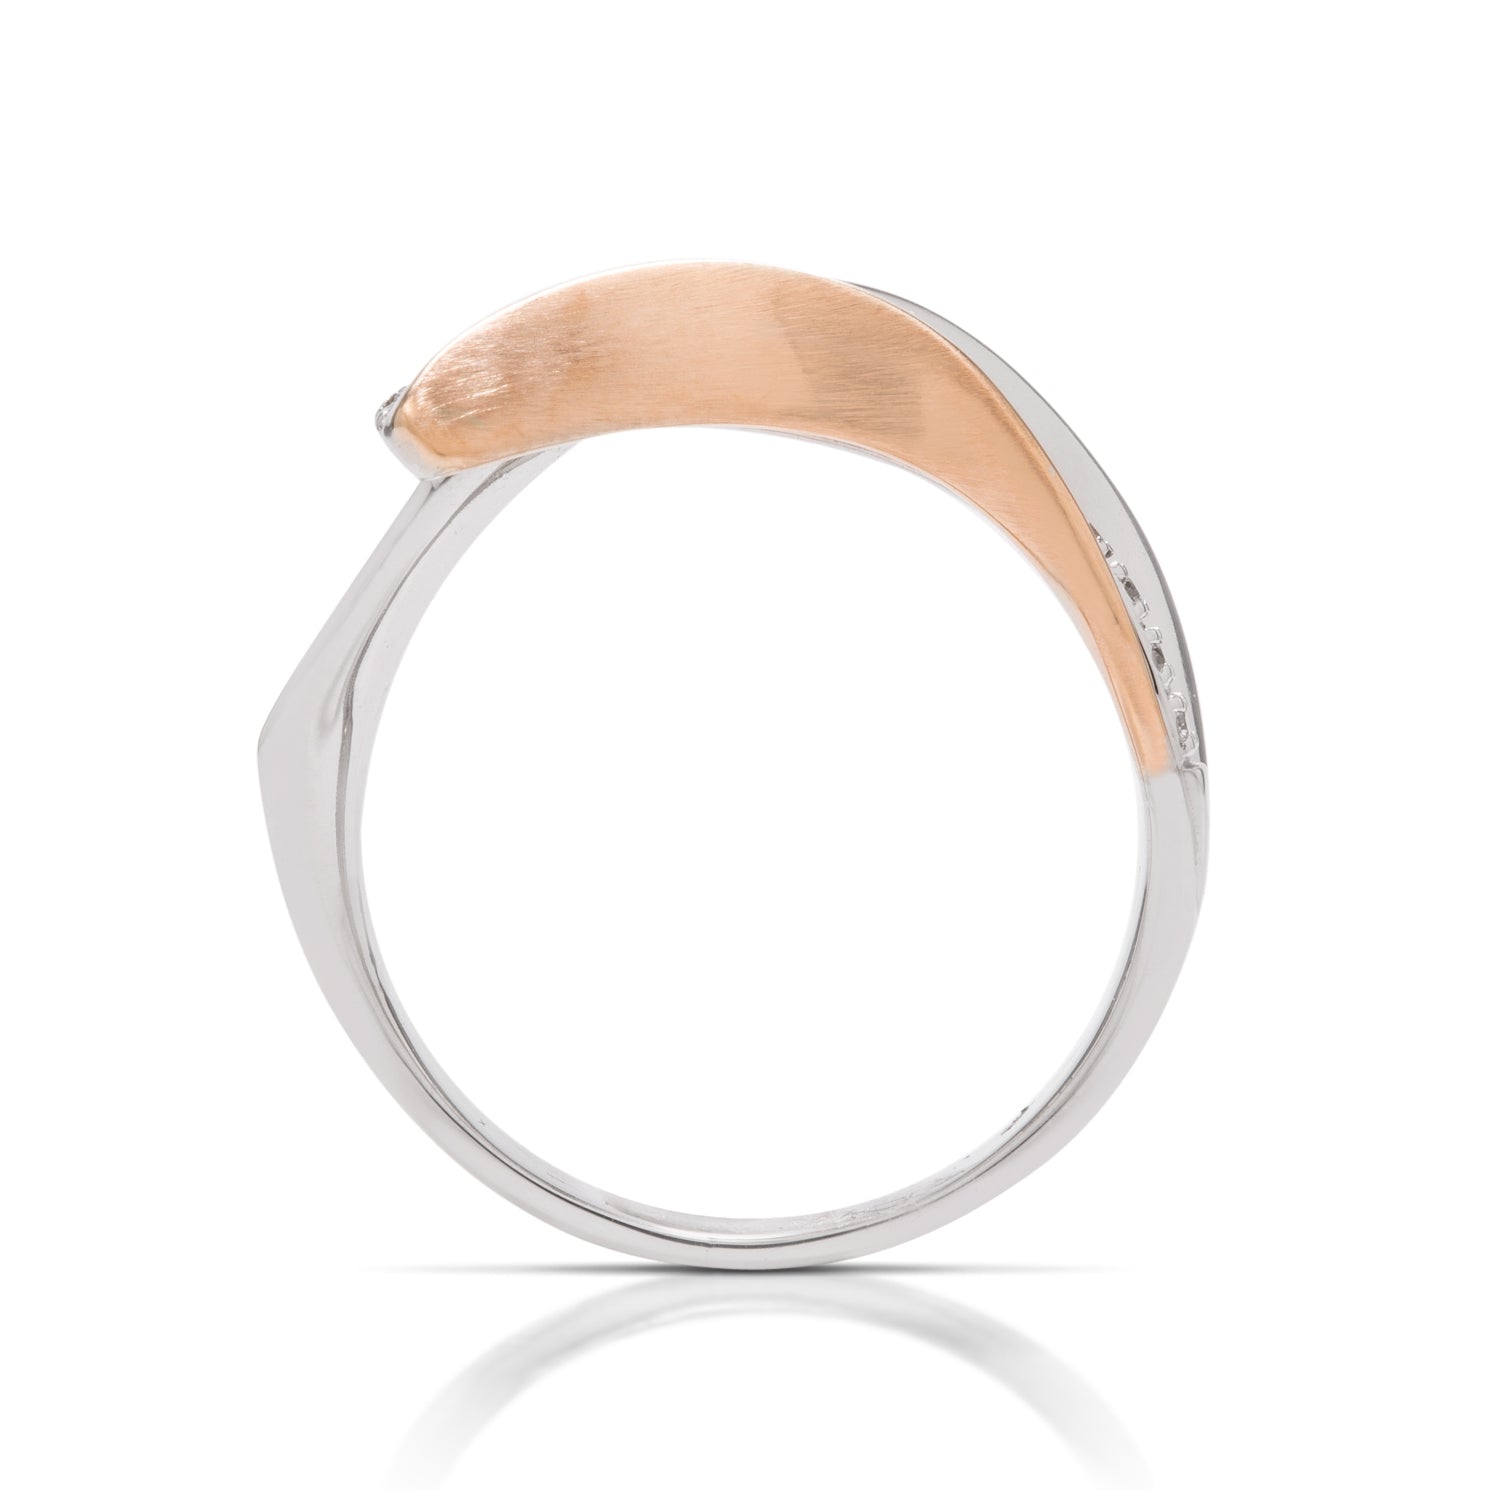 18k Rose & White Gold Diamond Ring - Charles Koll Jewellers